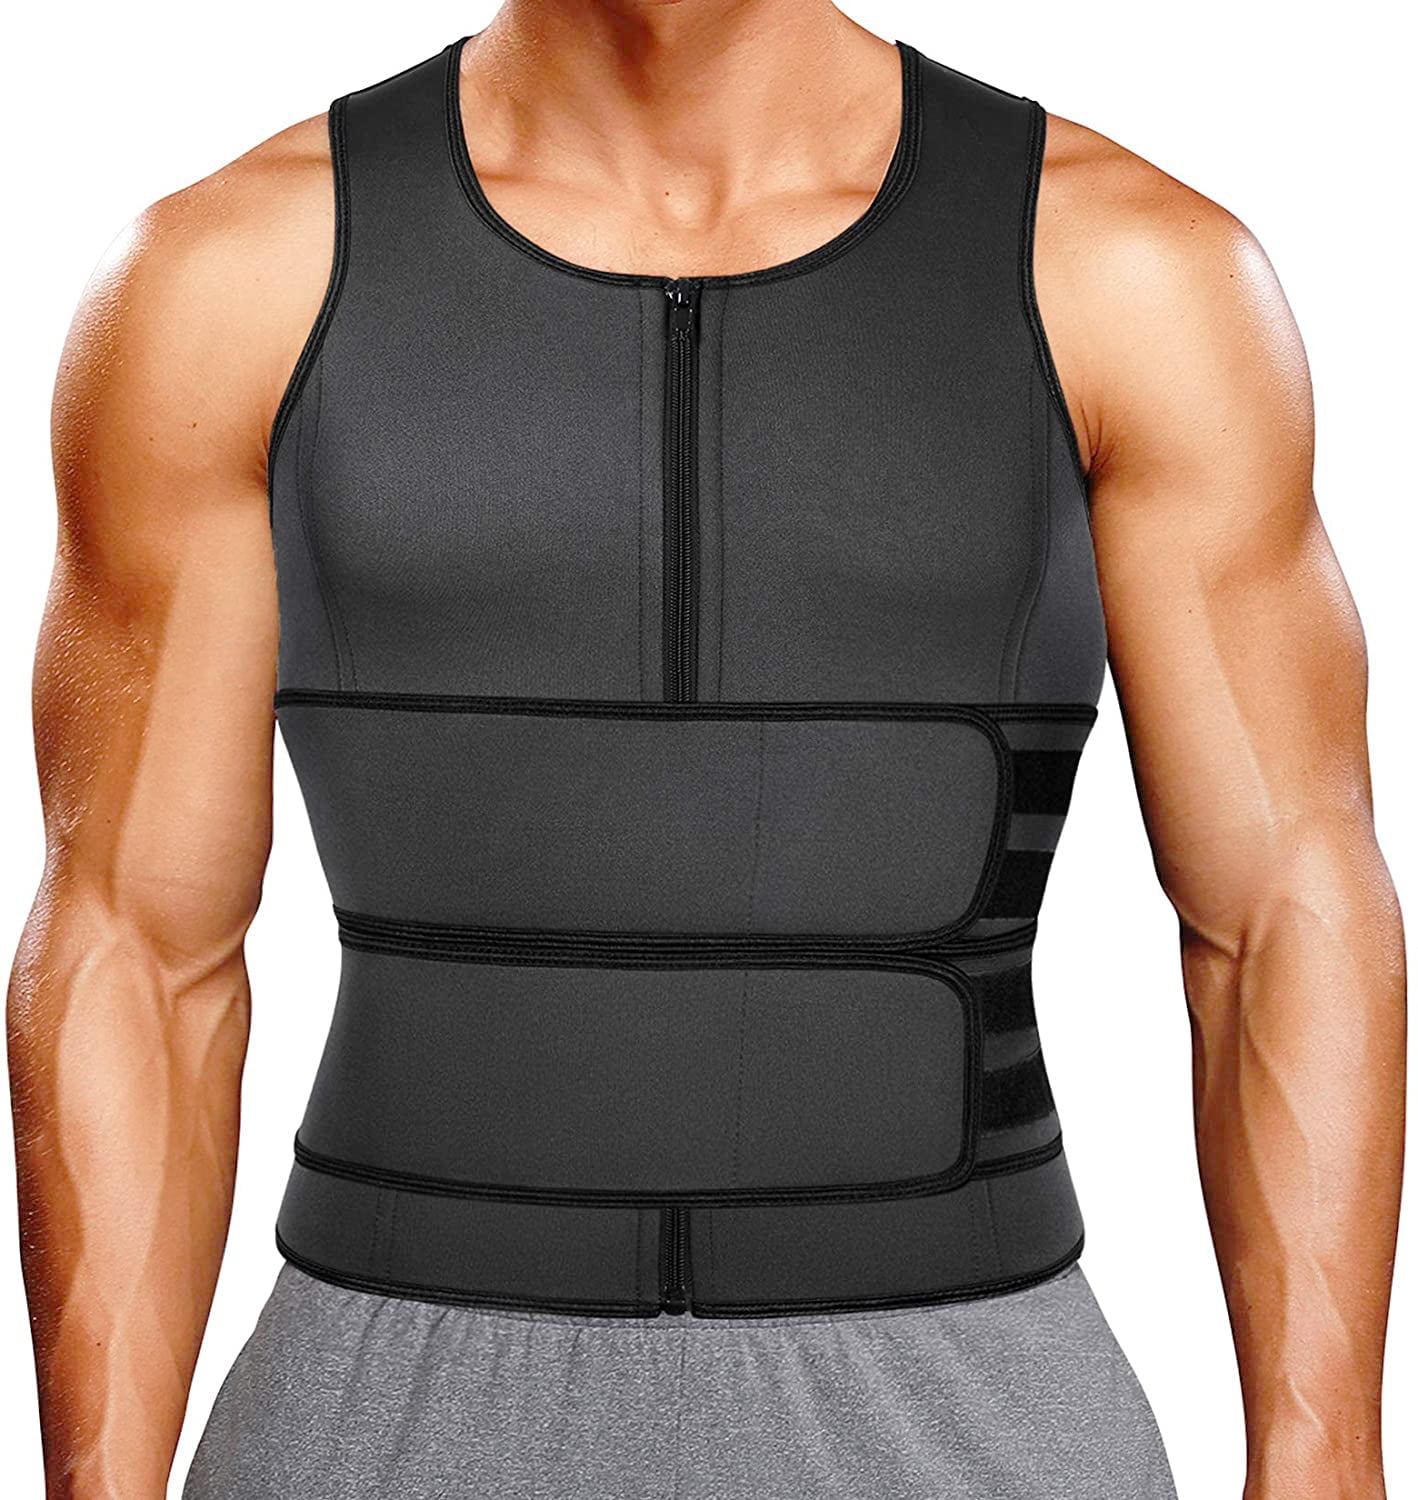 Men's Neoprene Sauna Suit Waist Trainer Vest Body Shaper Back Support Workout